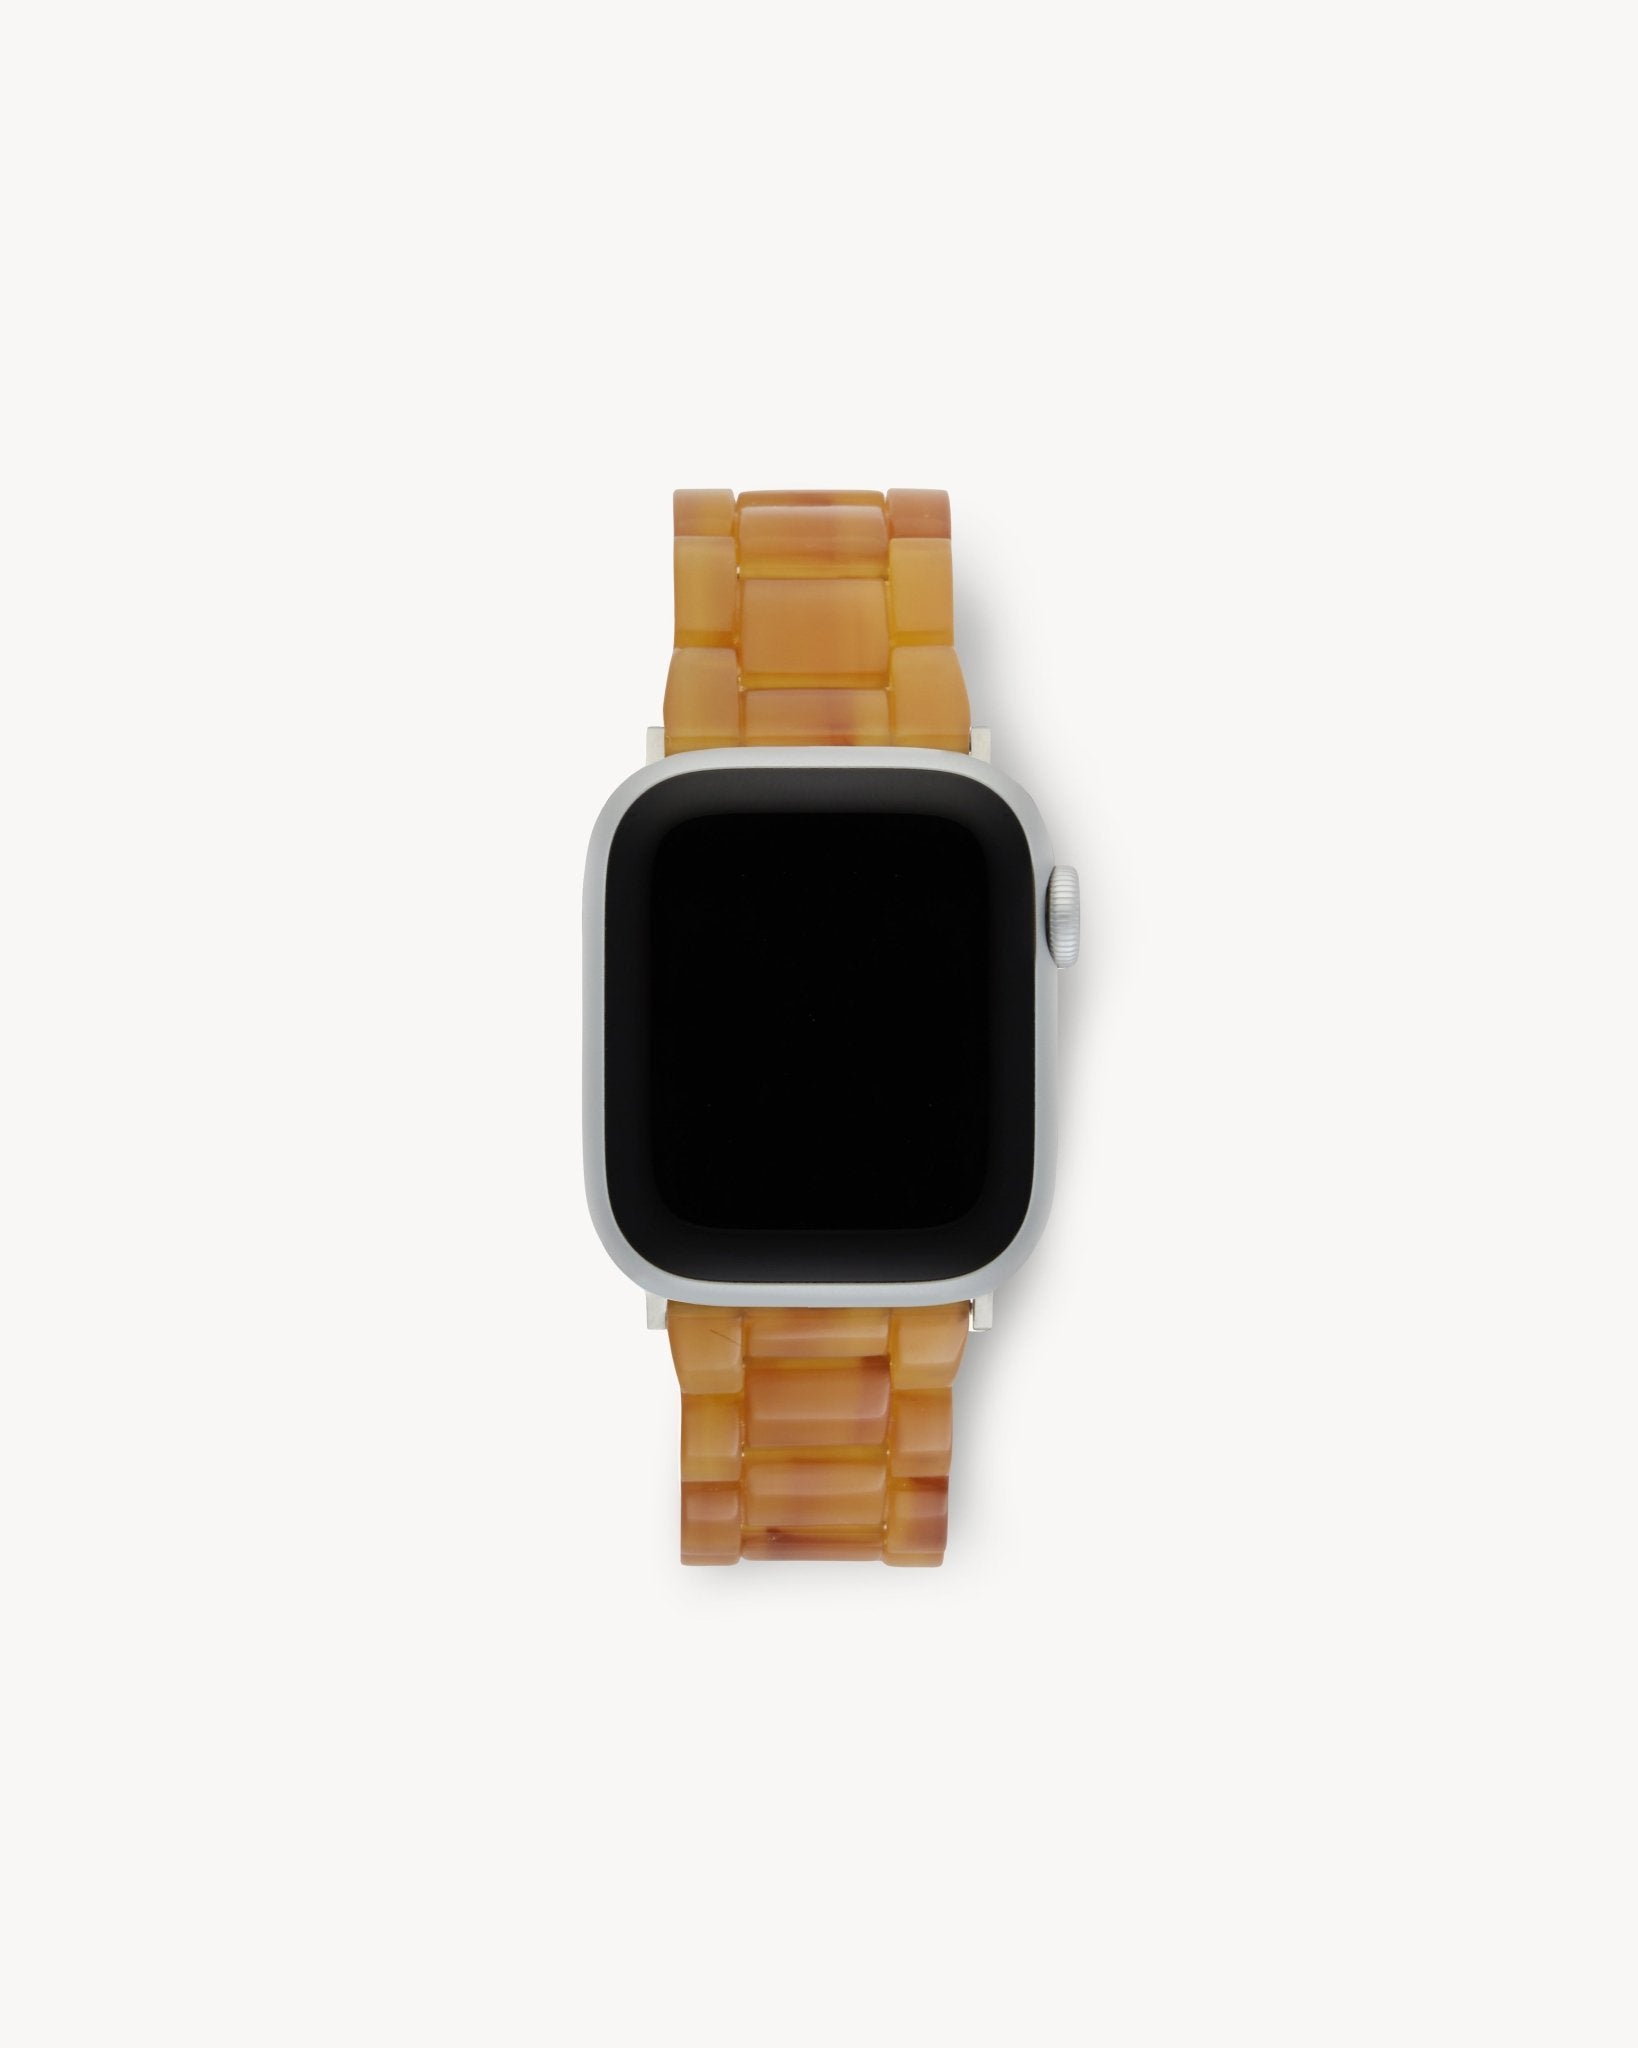 MACHETE Apple Watch Band in Cognac